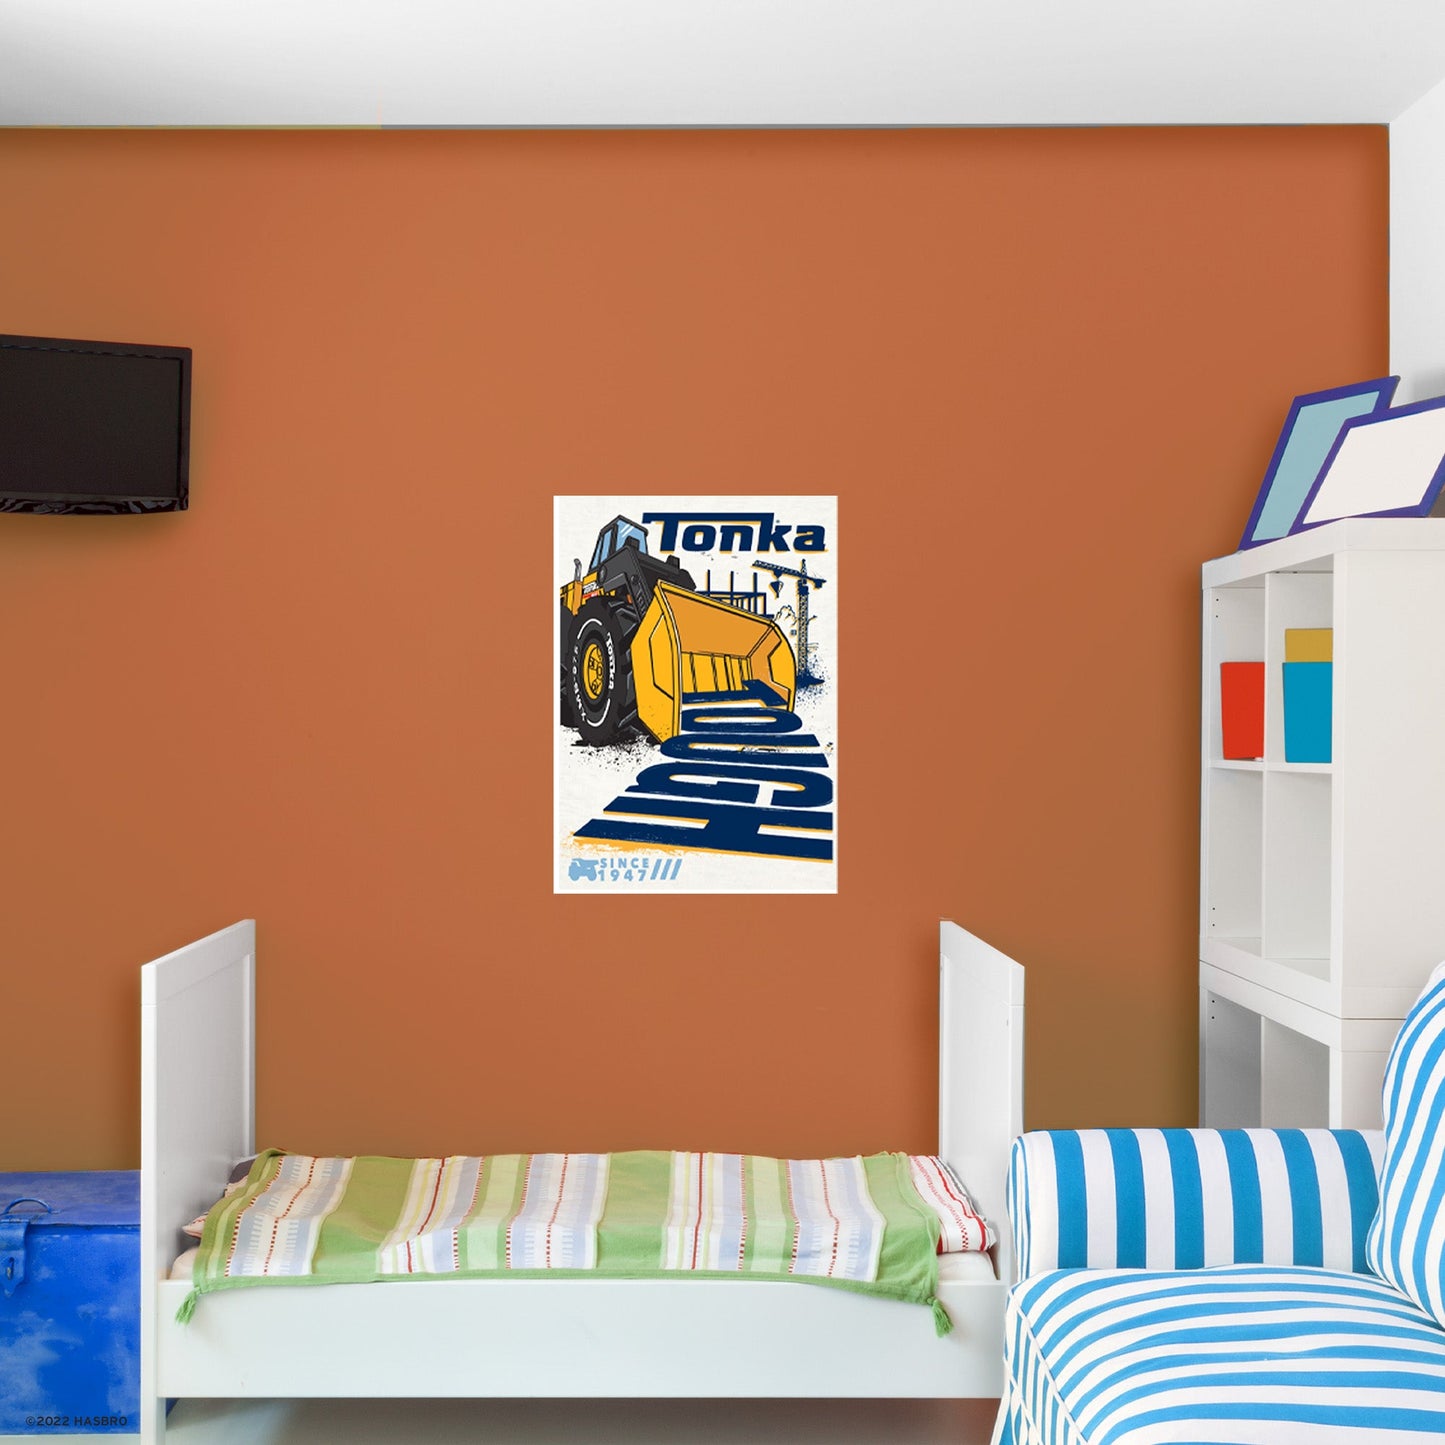 Tonka Trucks: Frontloader Tonka Tough Poster - Officially Licensed Hasbro Removable Adhesive Decal